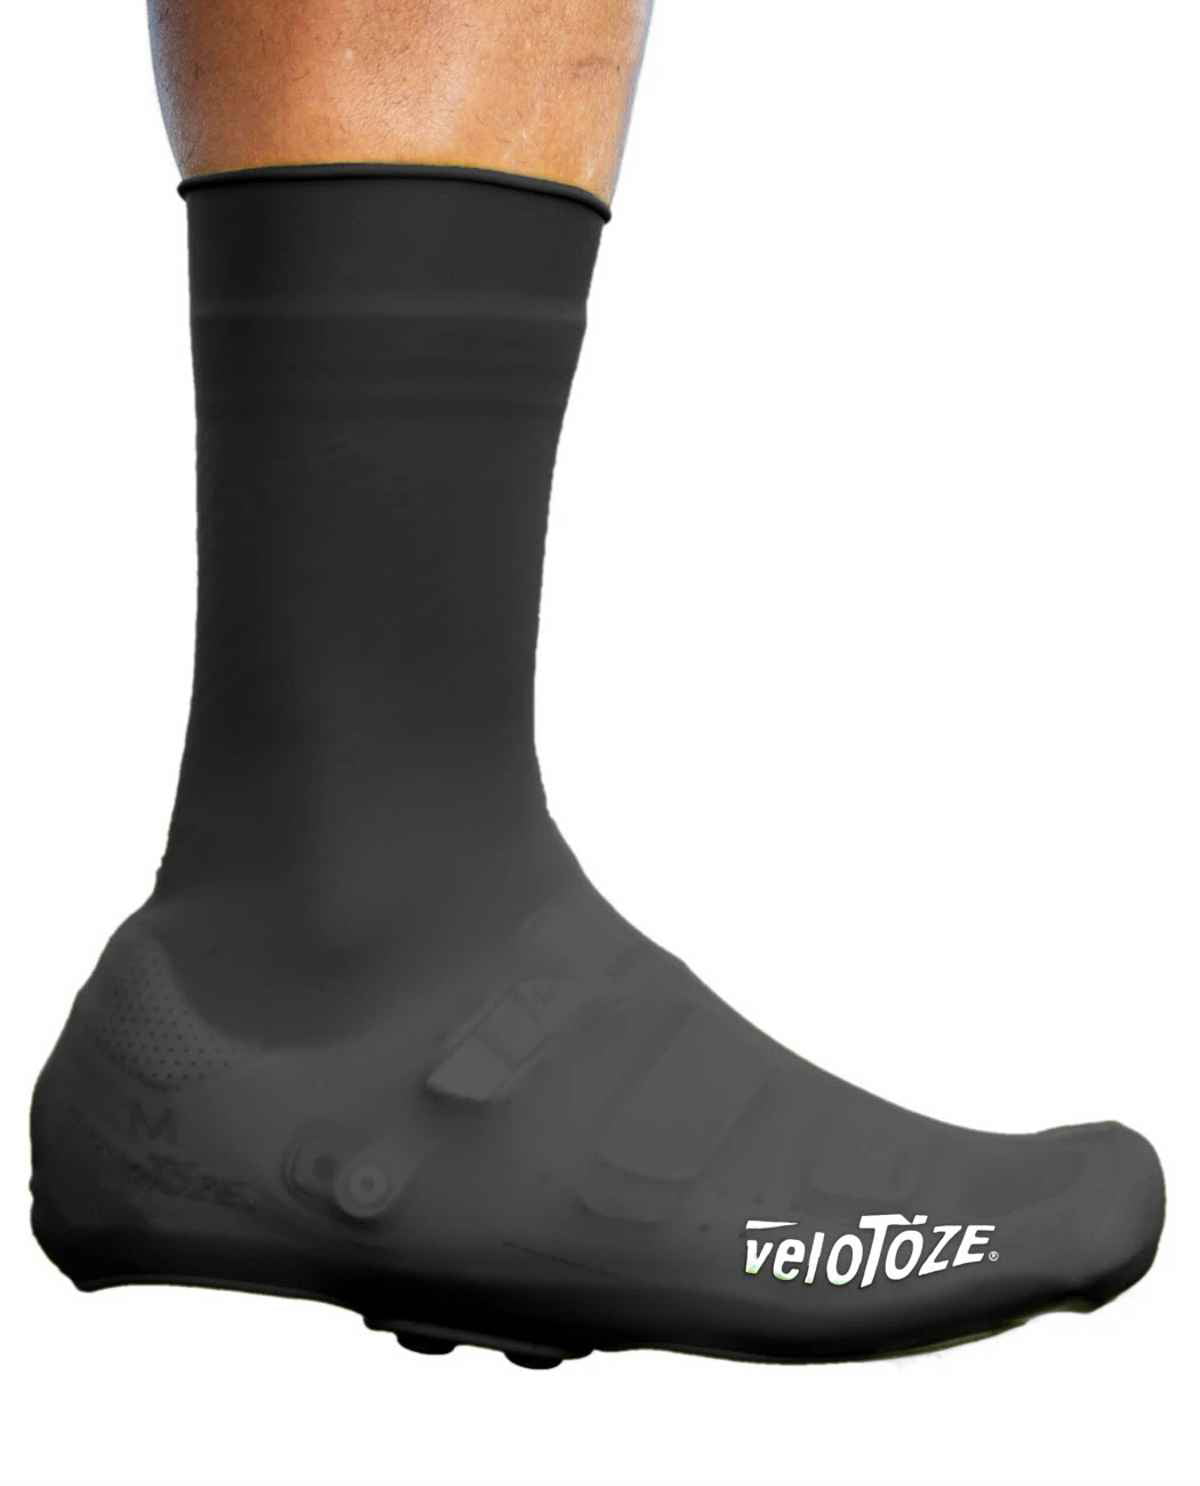 L Black VeloToze Shoe Covers Silicone 43-46 